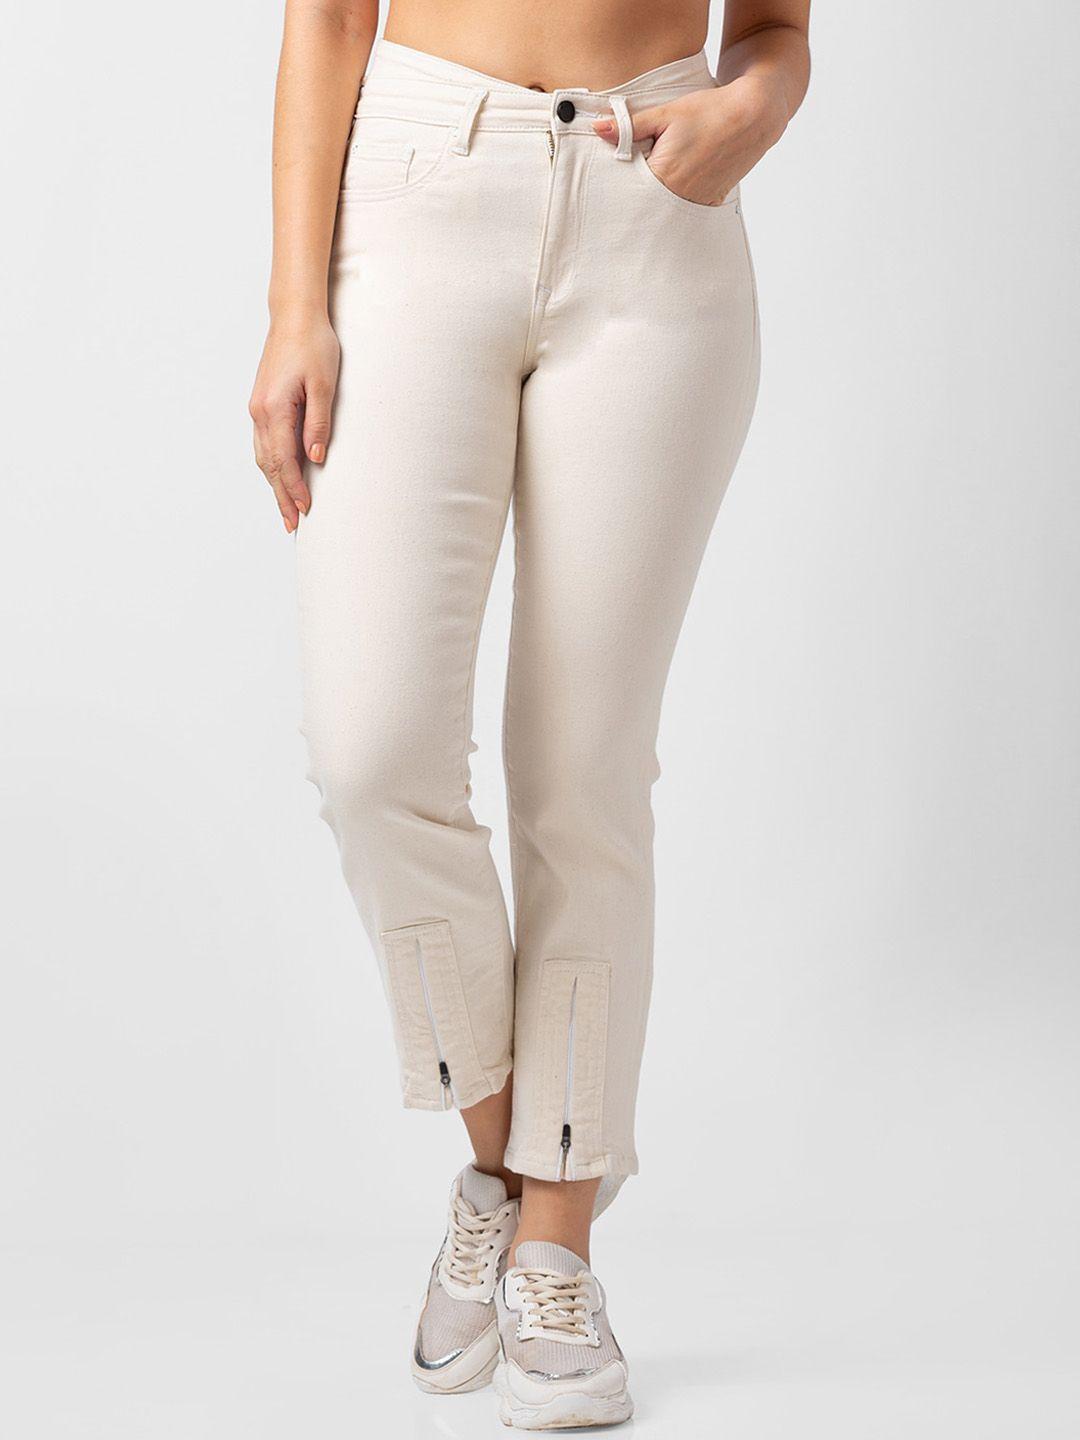 spykar-women-slim-fit-ankle-length-jeans